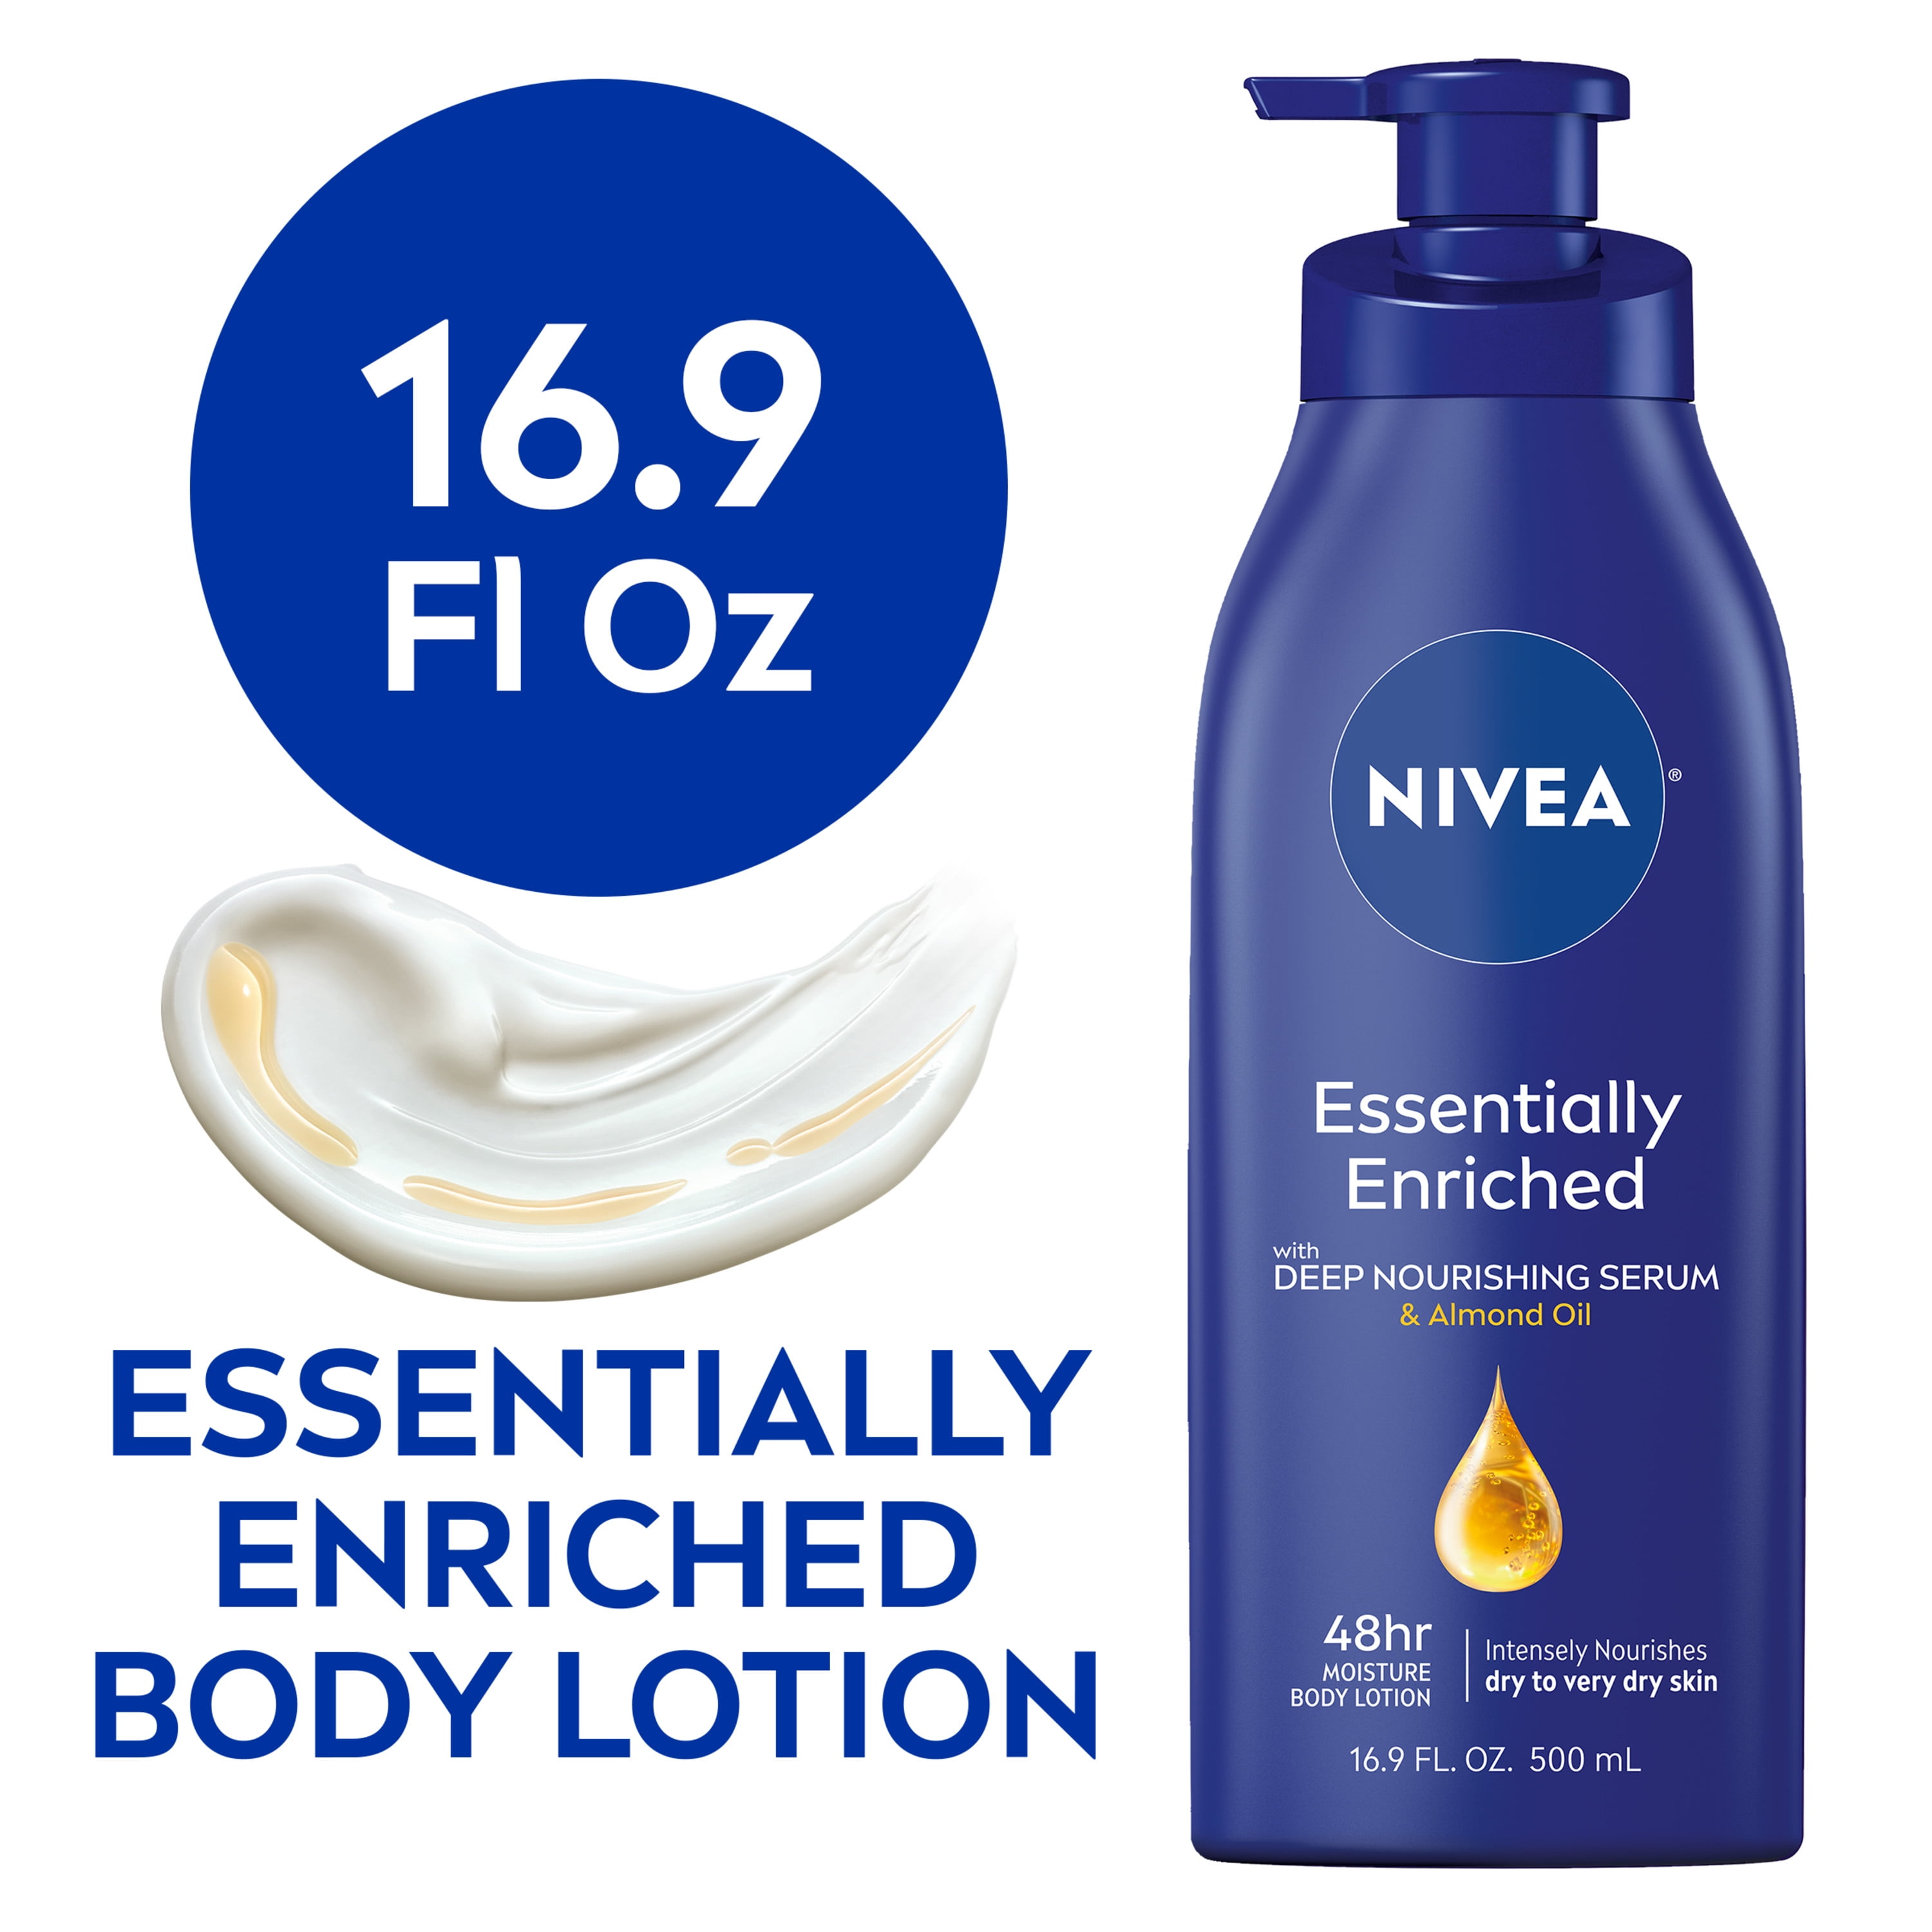 NIVEA Essentially Enriched Body Lotion for Dry Skin, 16.9 Fl Oz Bottle